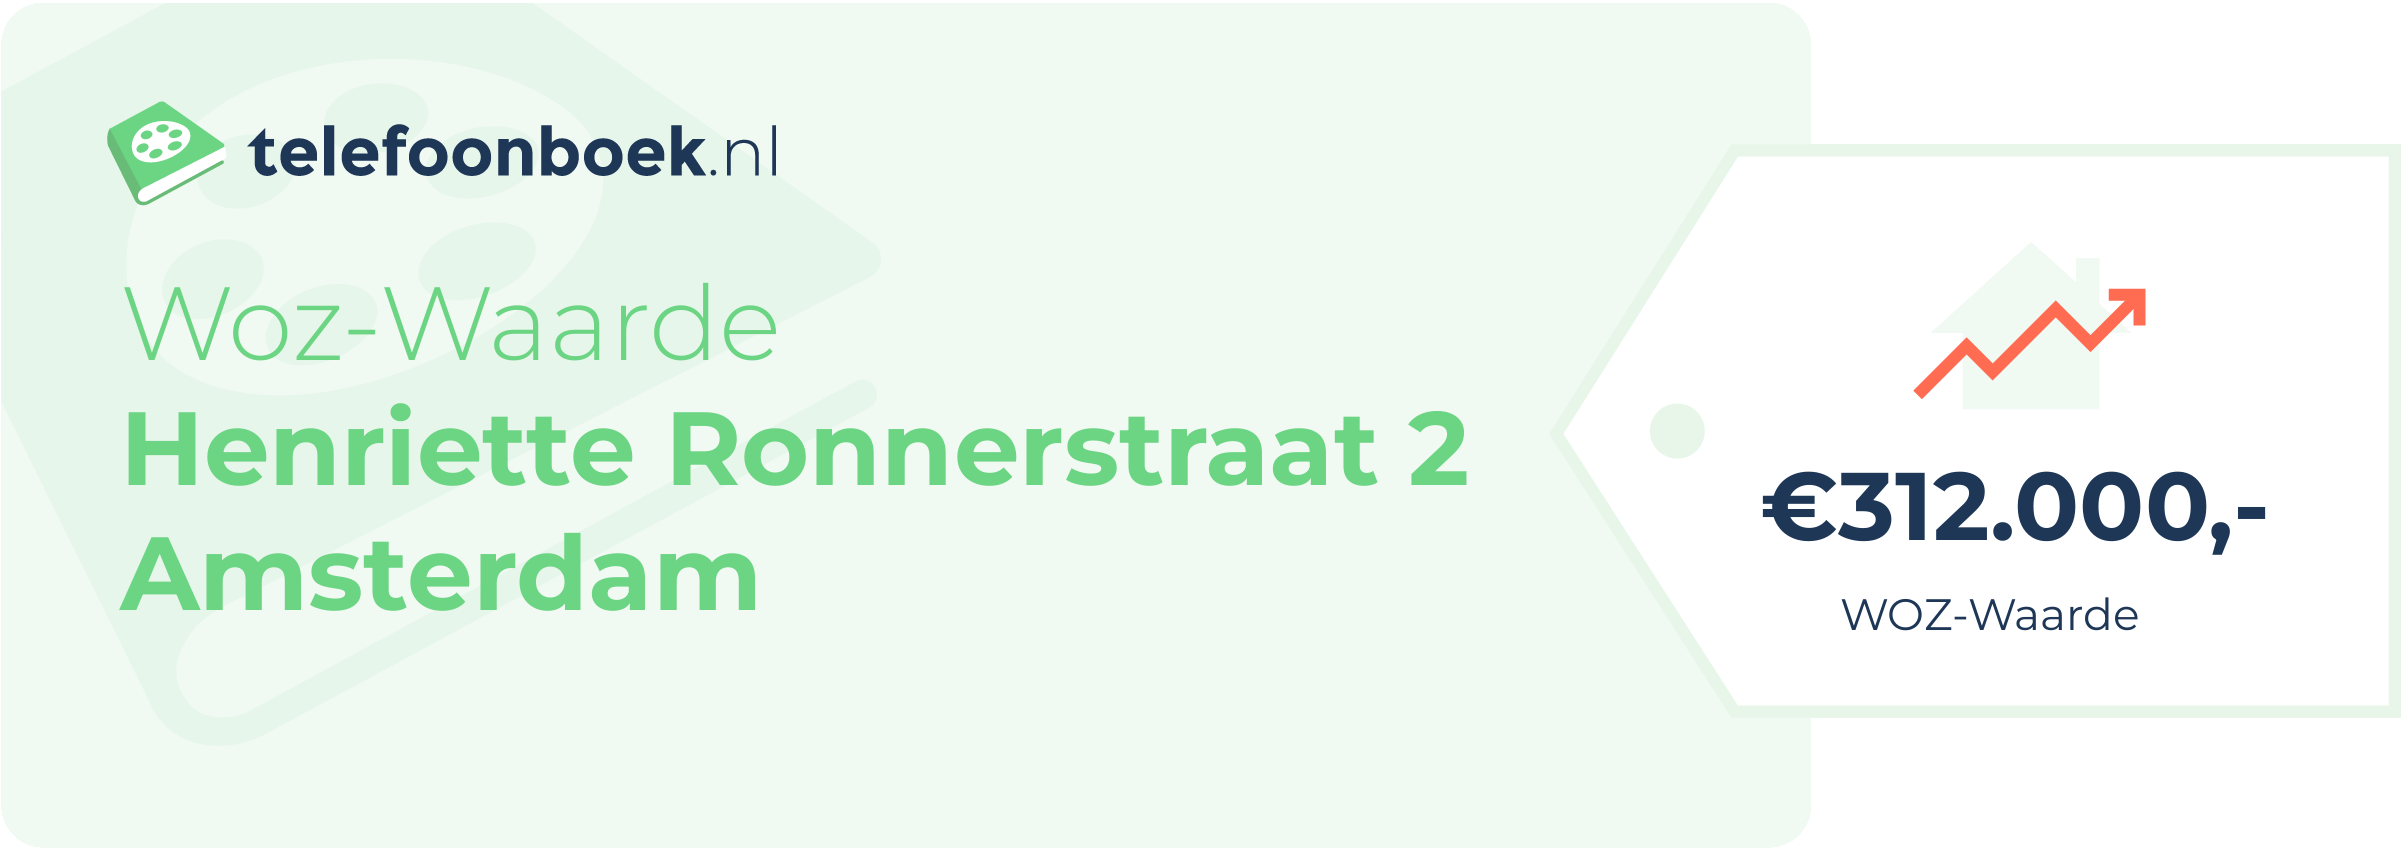 WOZ-waarde Henriette Ronnerstraat 2 Amsterdam